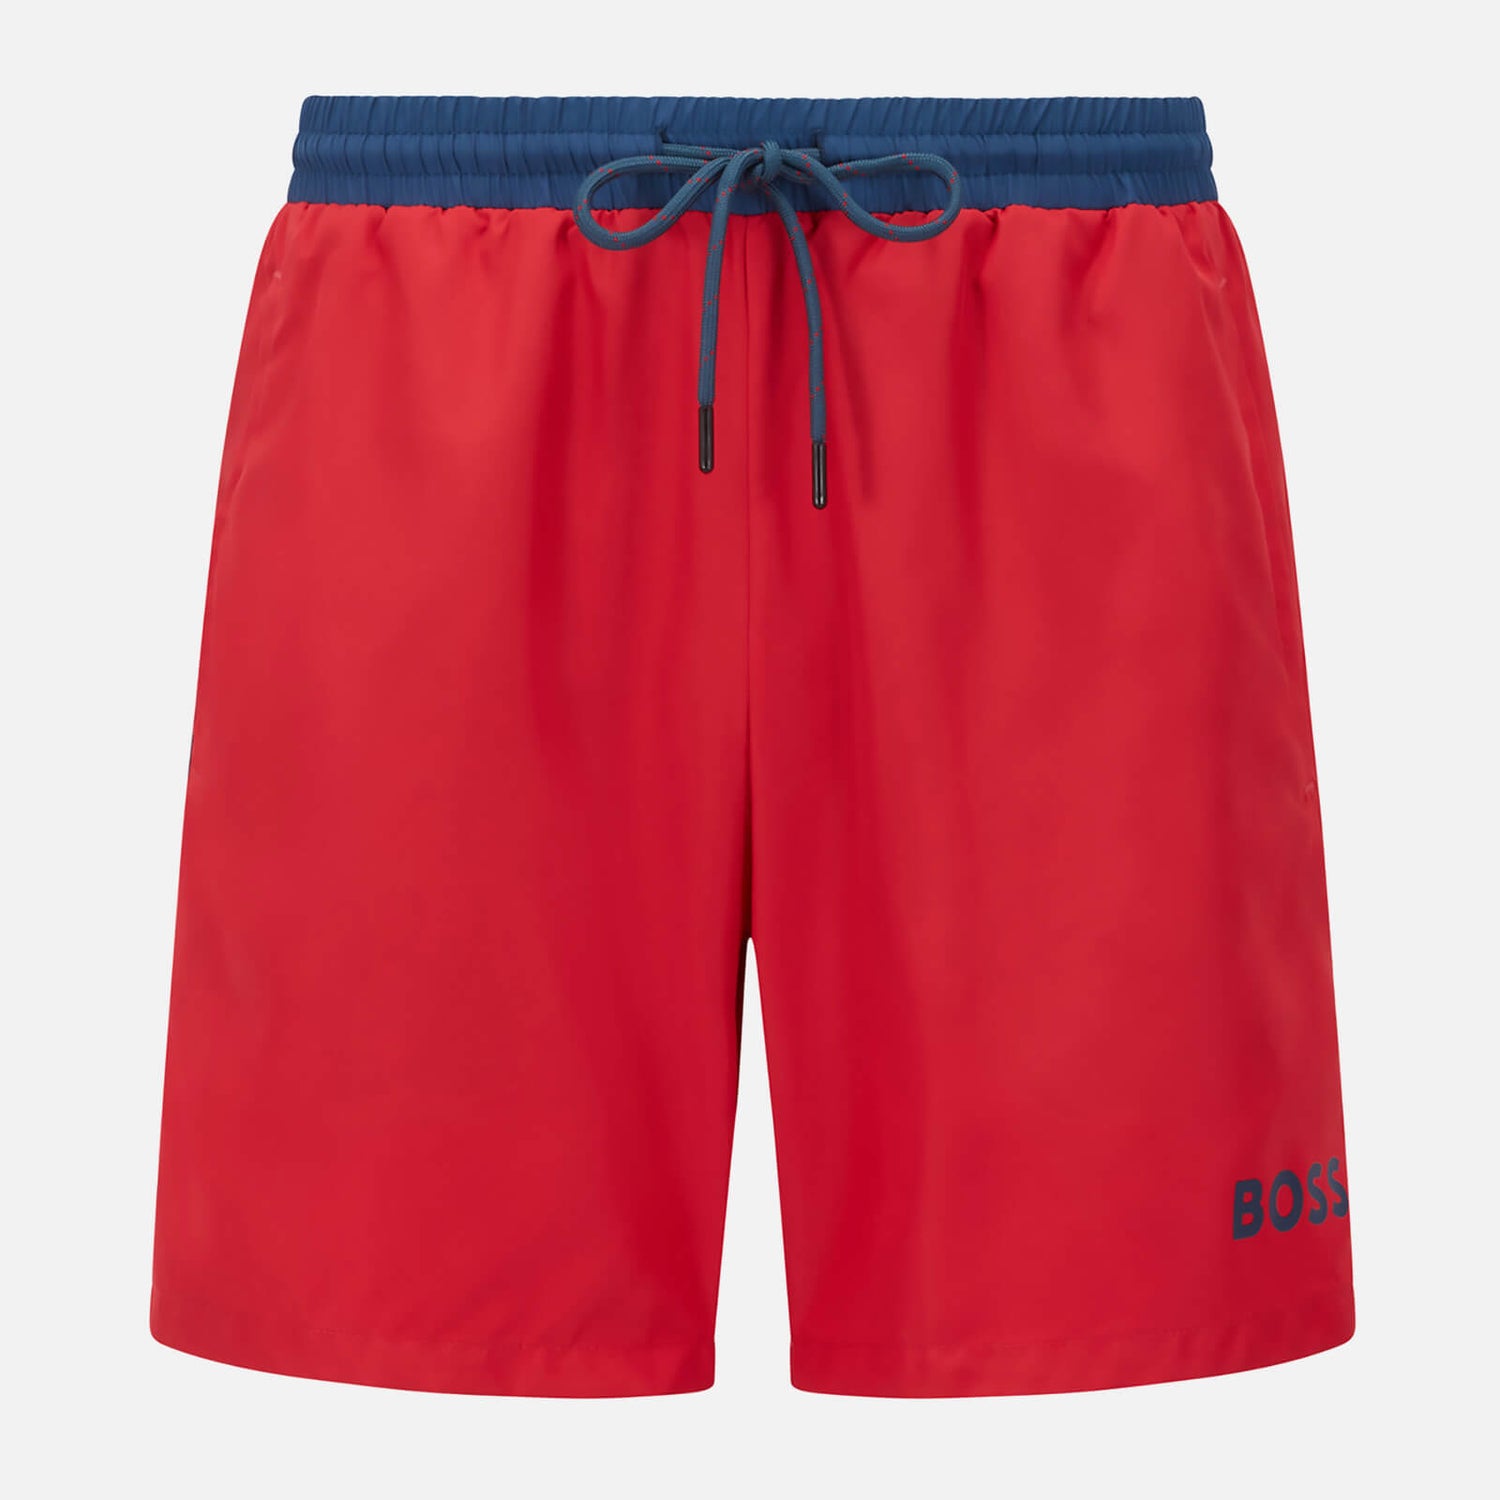 BOSS Bodywear Men's Starfish Swim Shorts - Bright Red